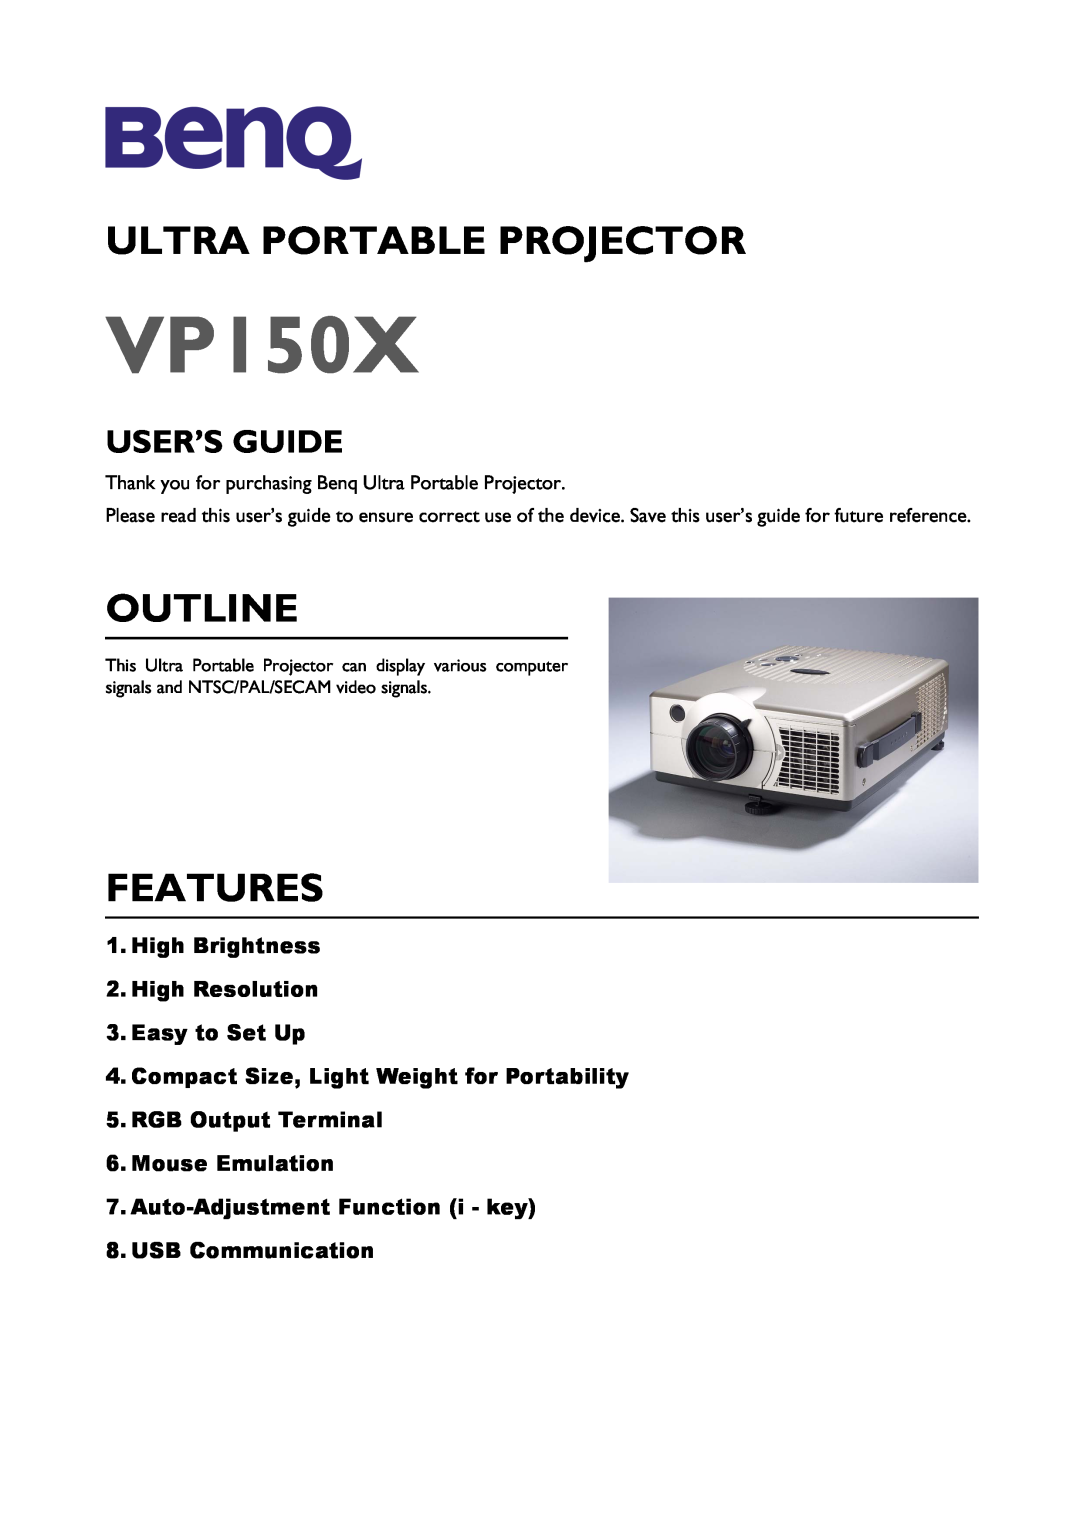 BenQ VP150X manual High Brightness 2. High Resolution 3. Easy to Set Up, USB Communication, Ultra Portable Projector 